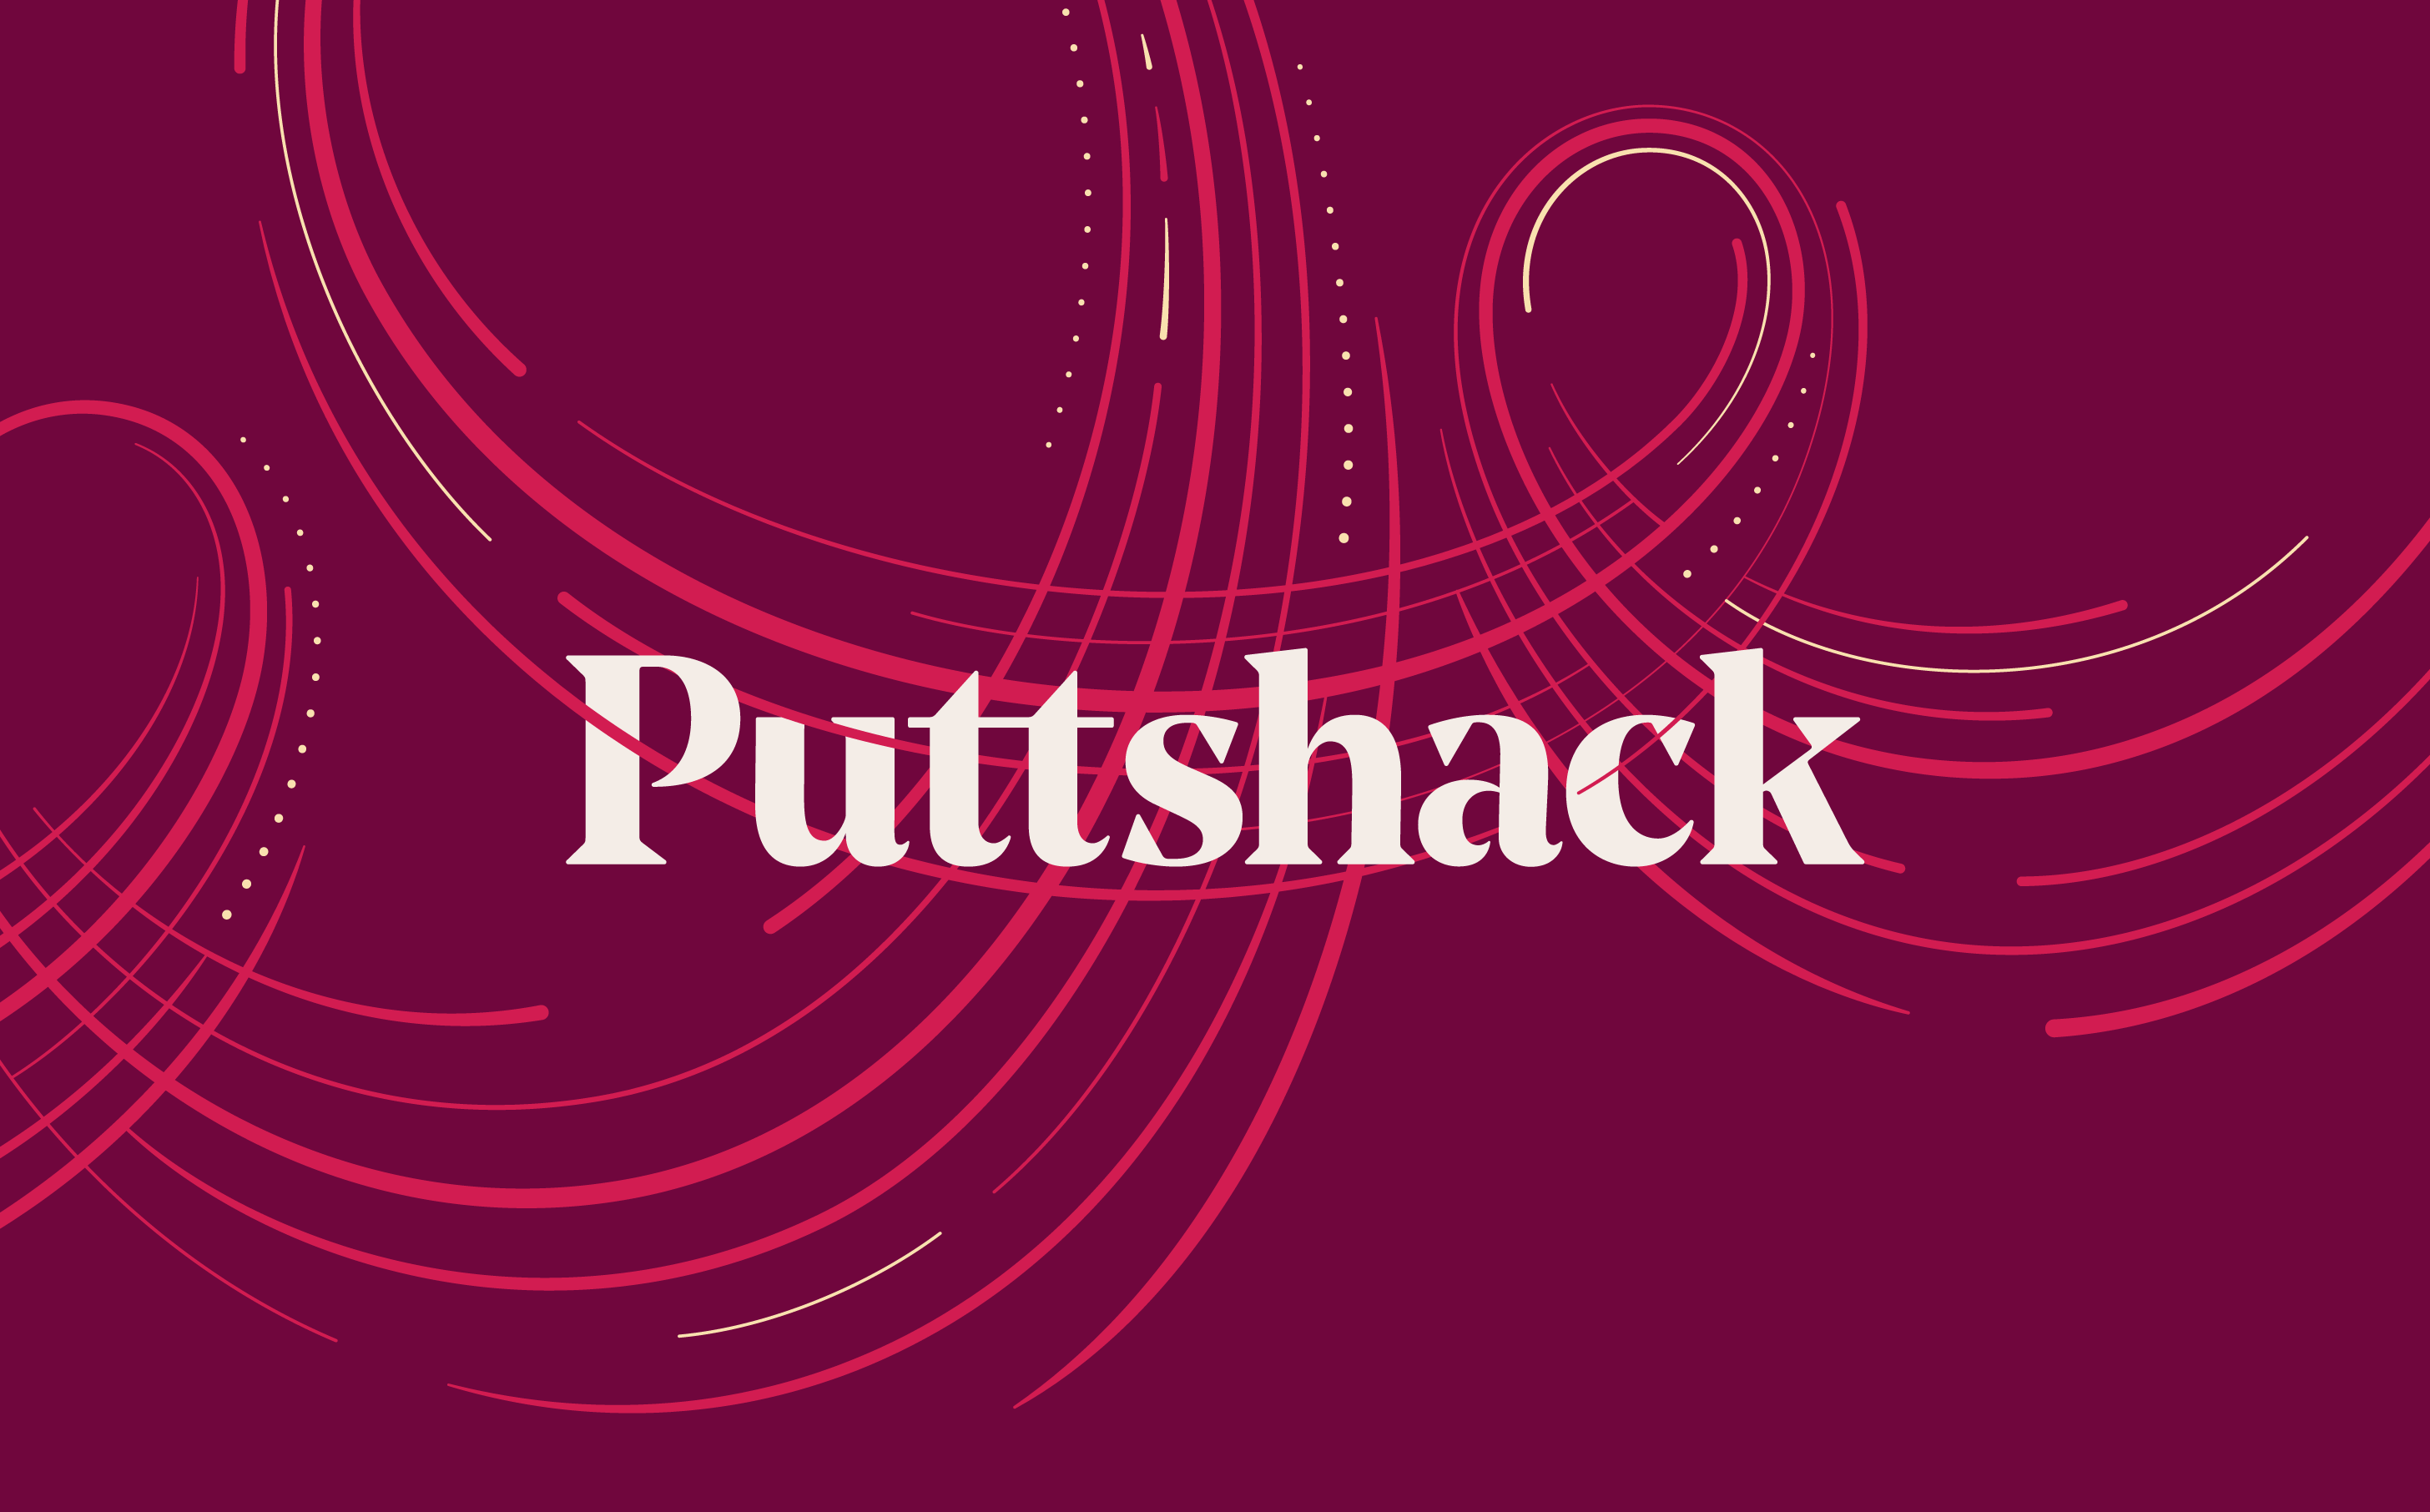 Puttshack-logo-ident